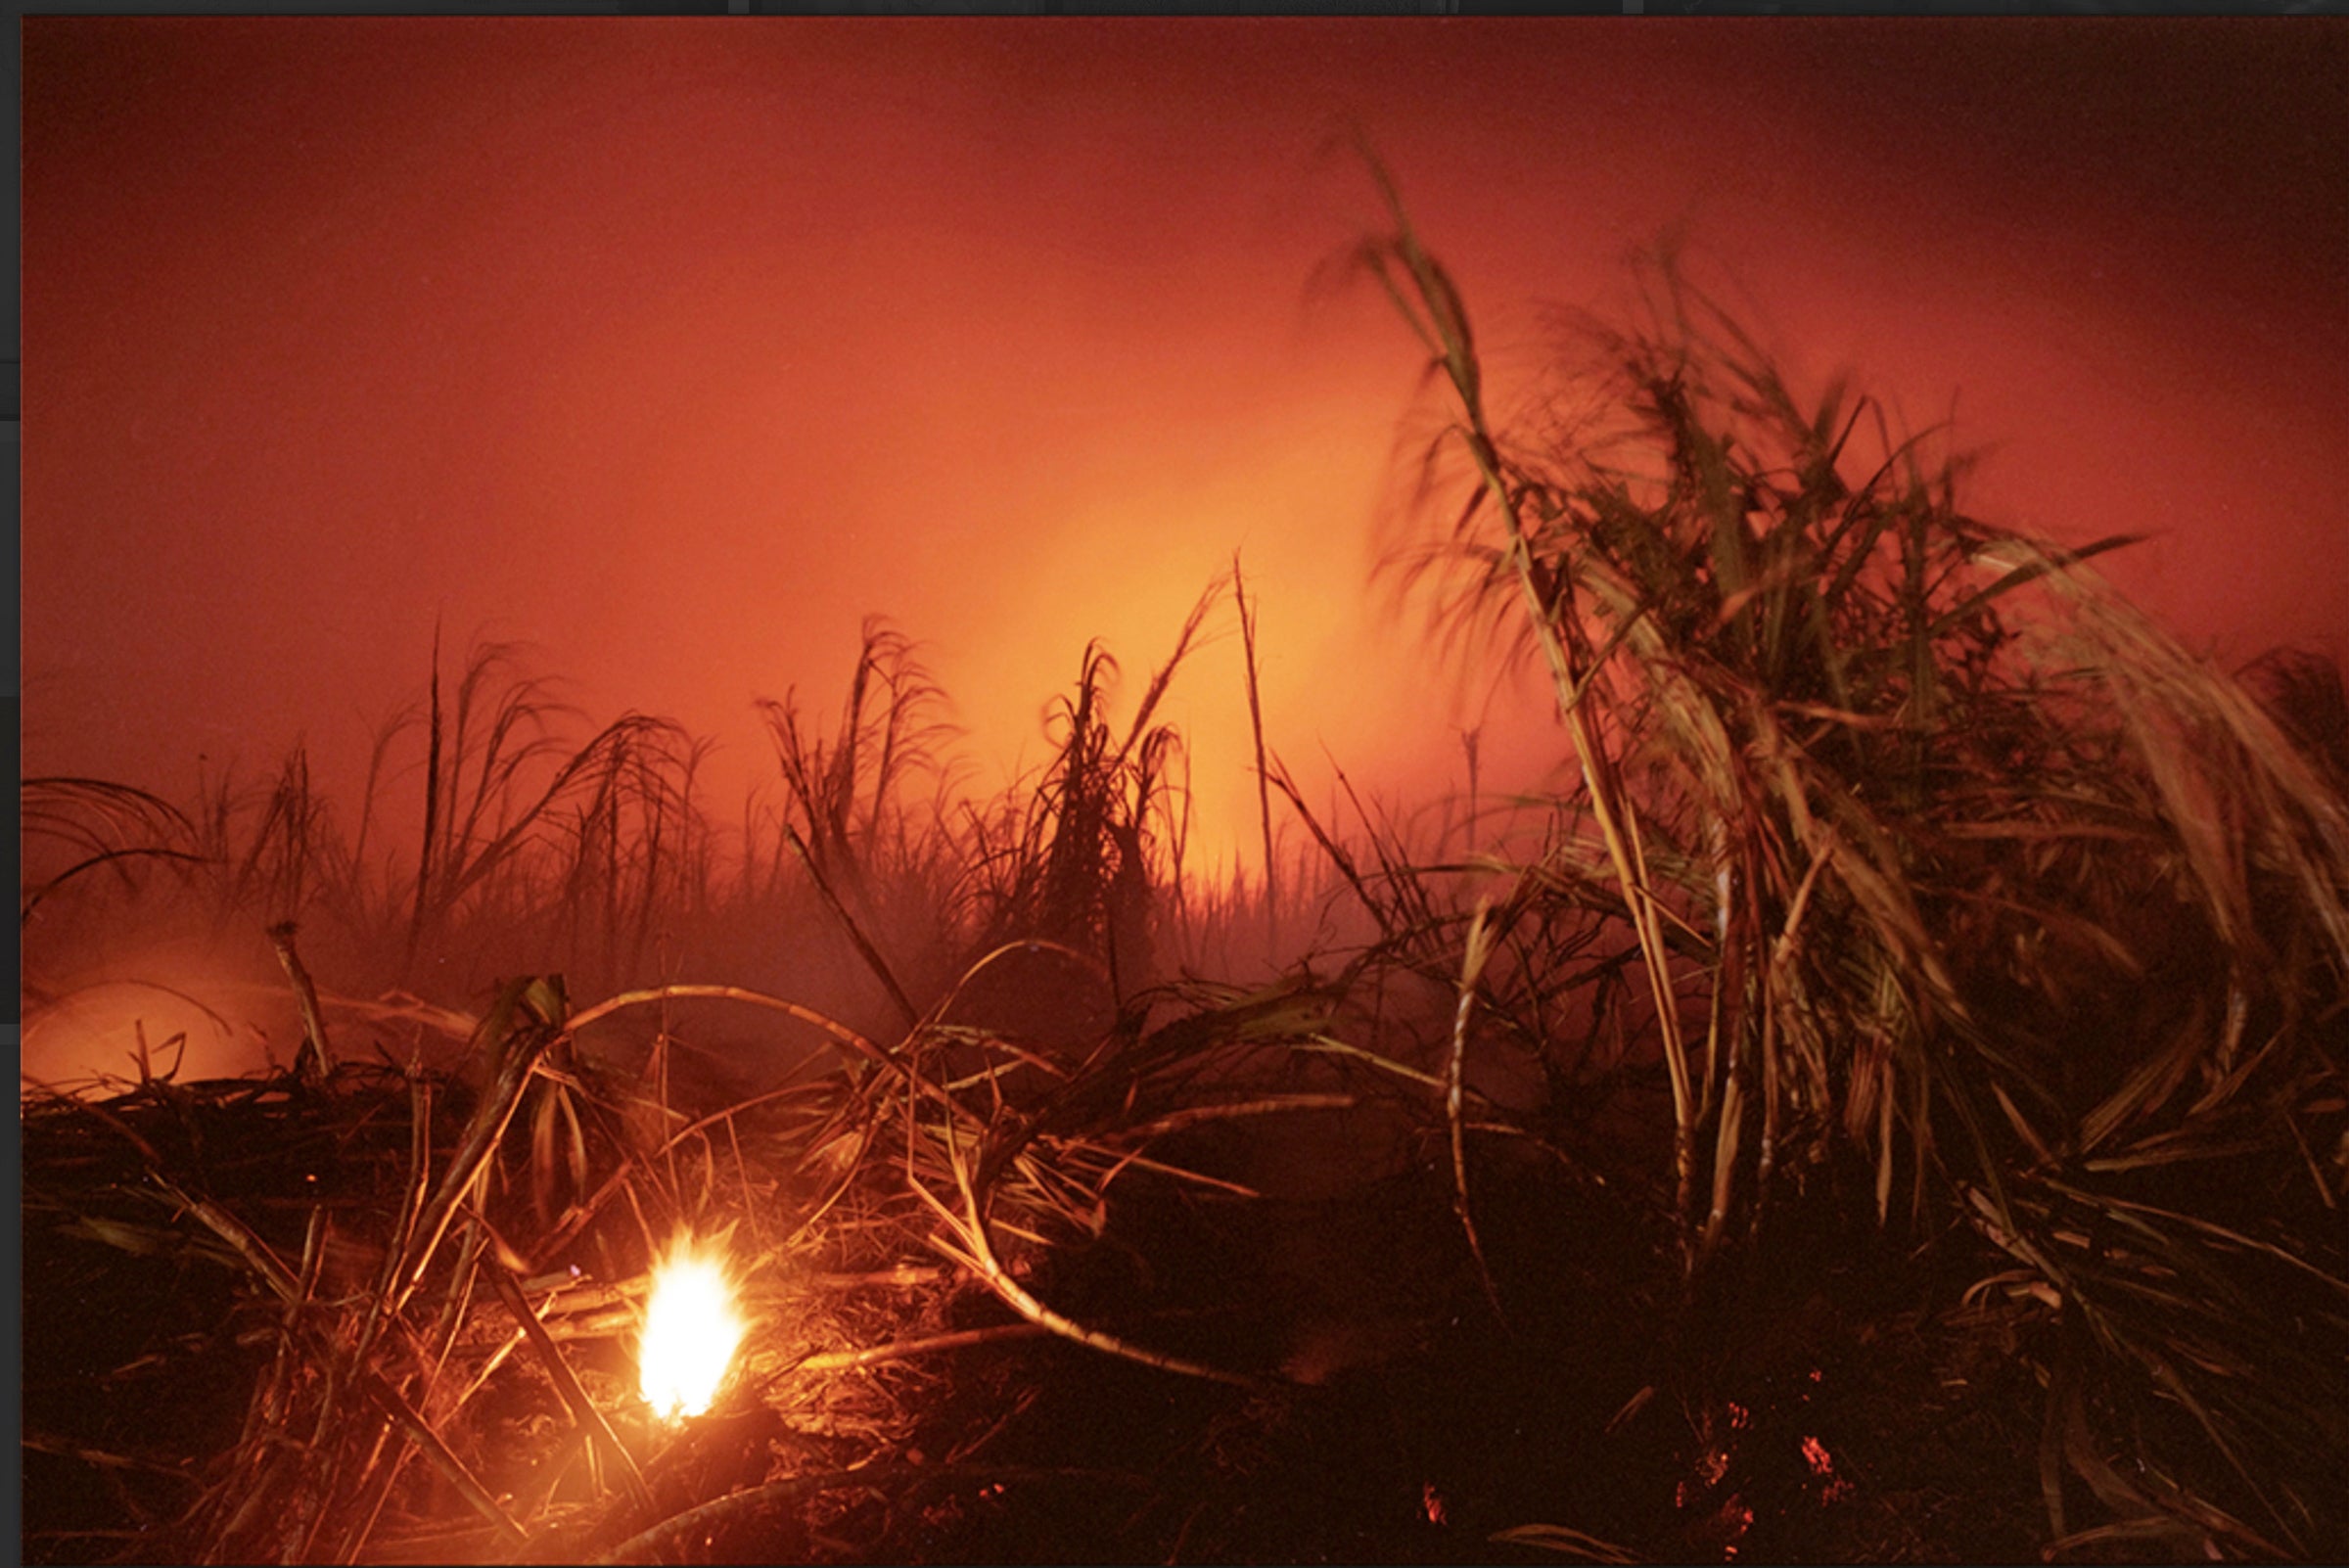 Burning the Sugar Cane, Maui, HI.